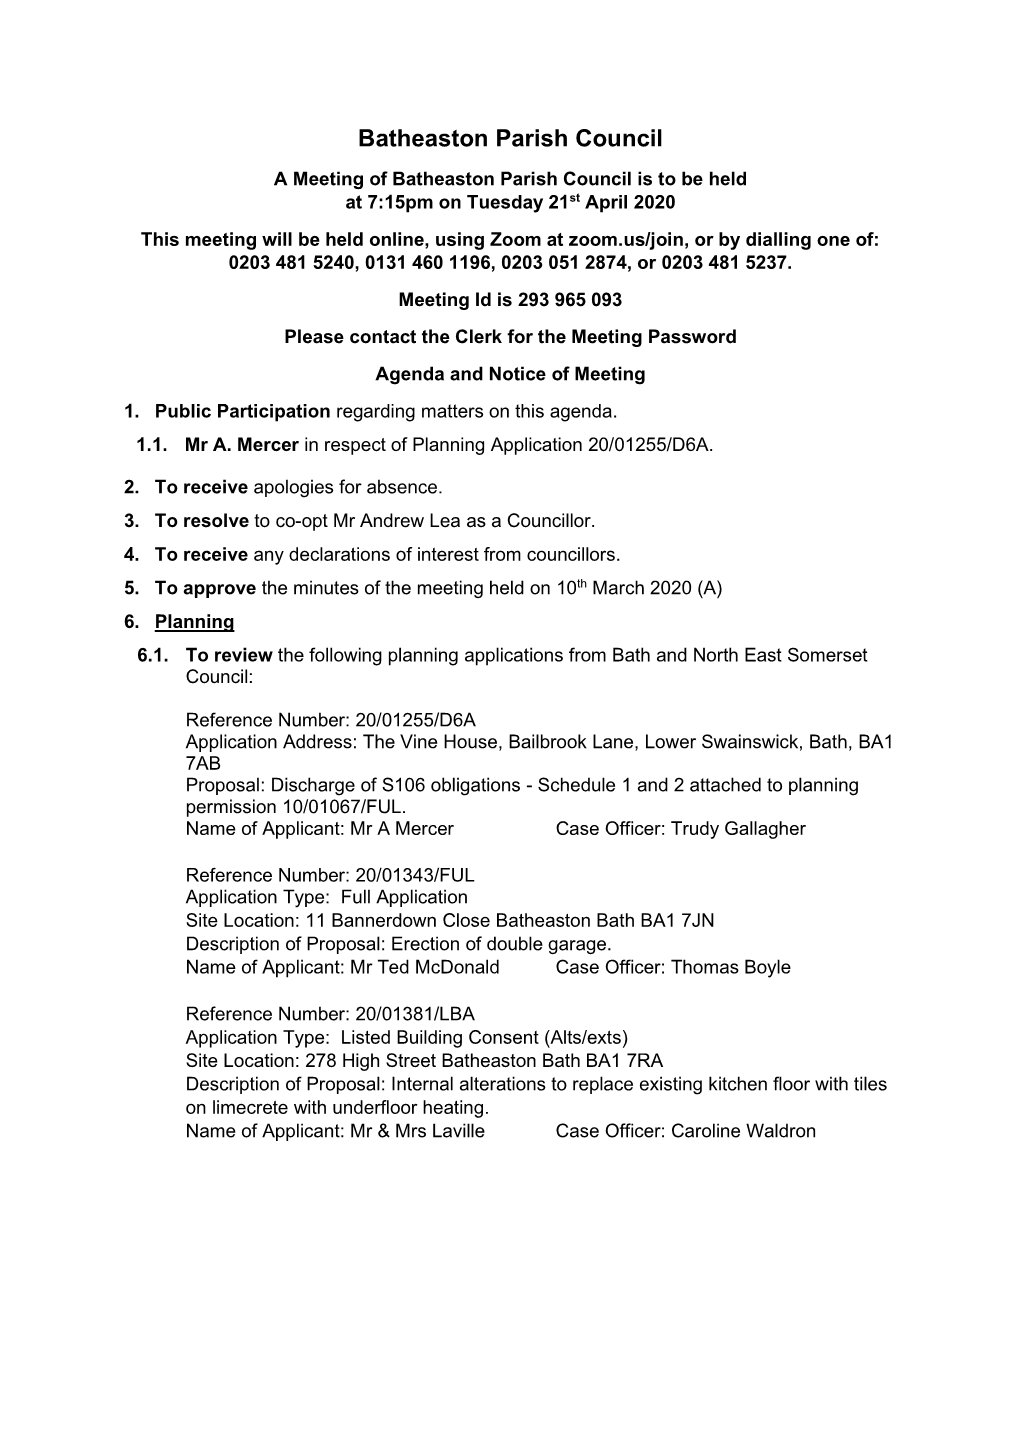 2020-04-21 Agenda of BPC (Full Council).Pdf